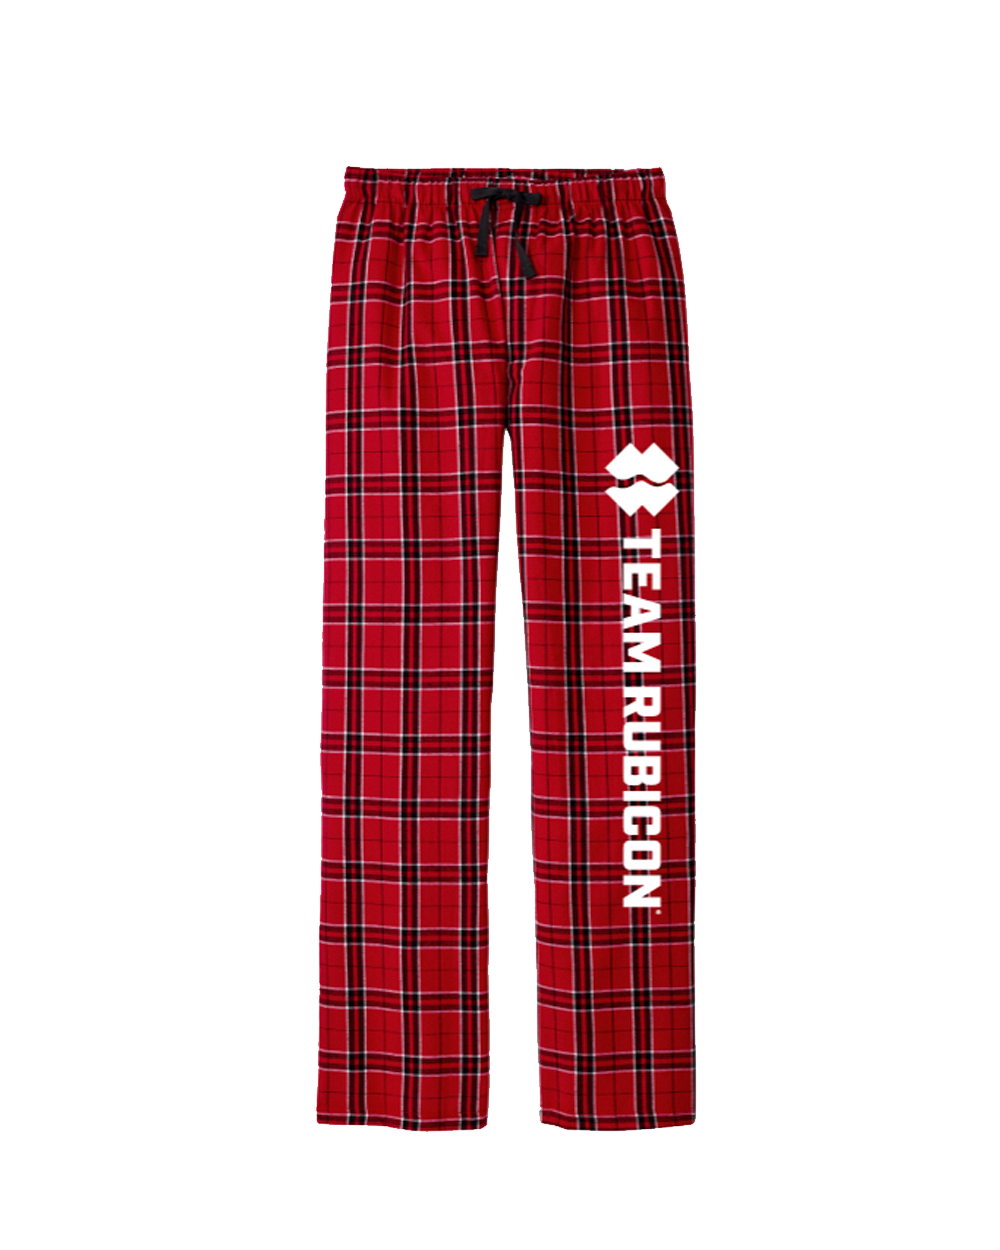 Regular Fit Flannel Pajamas - Red/plaid - Men